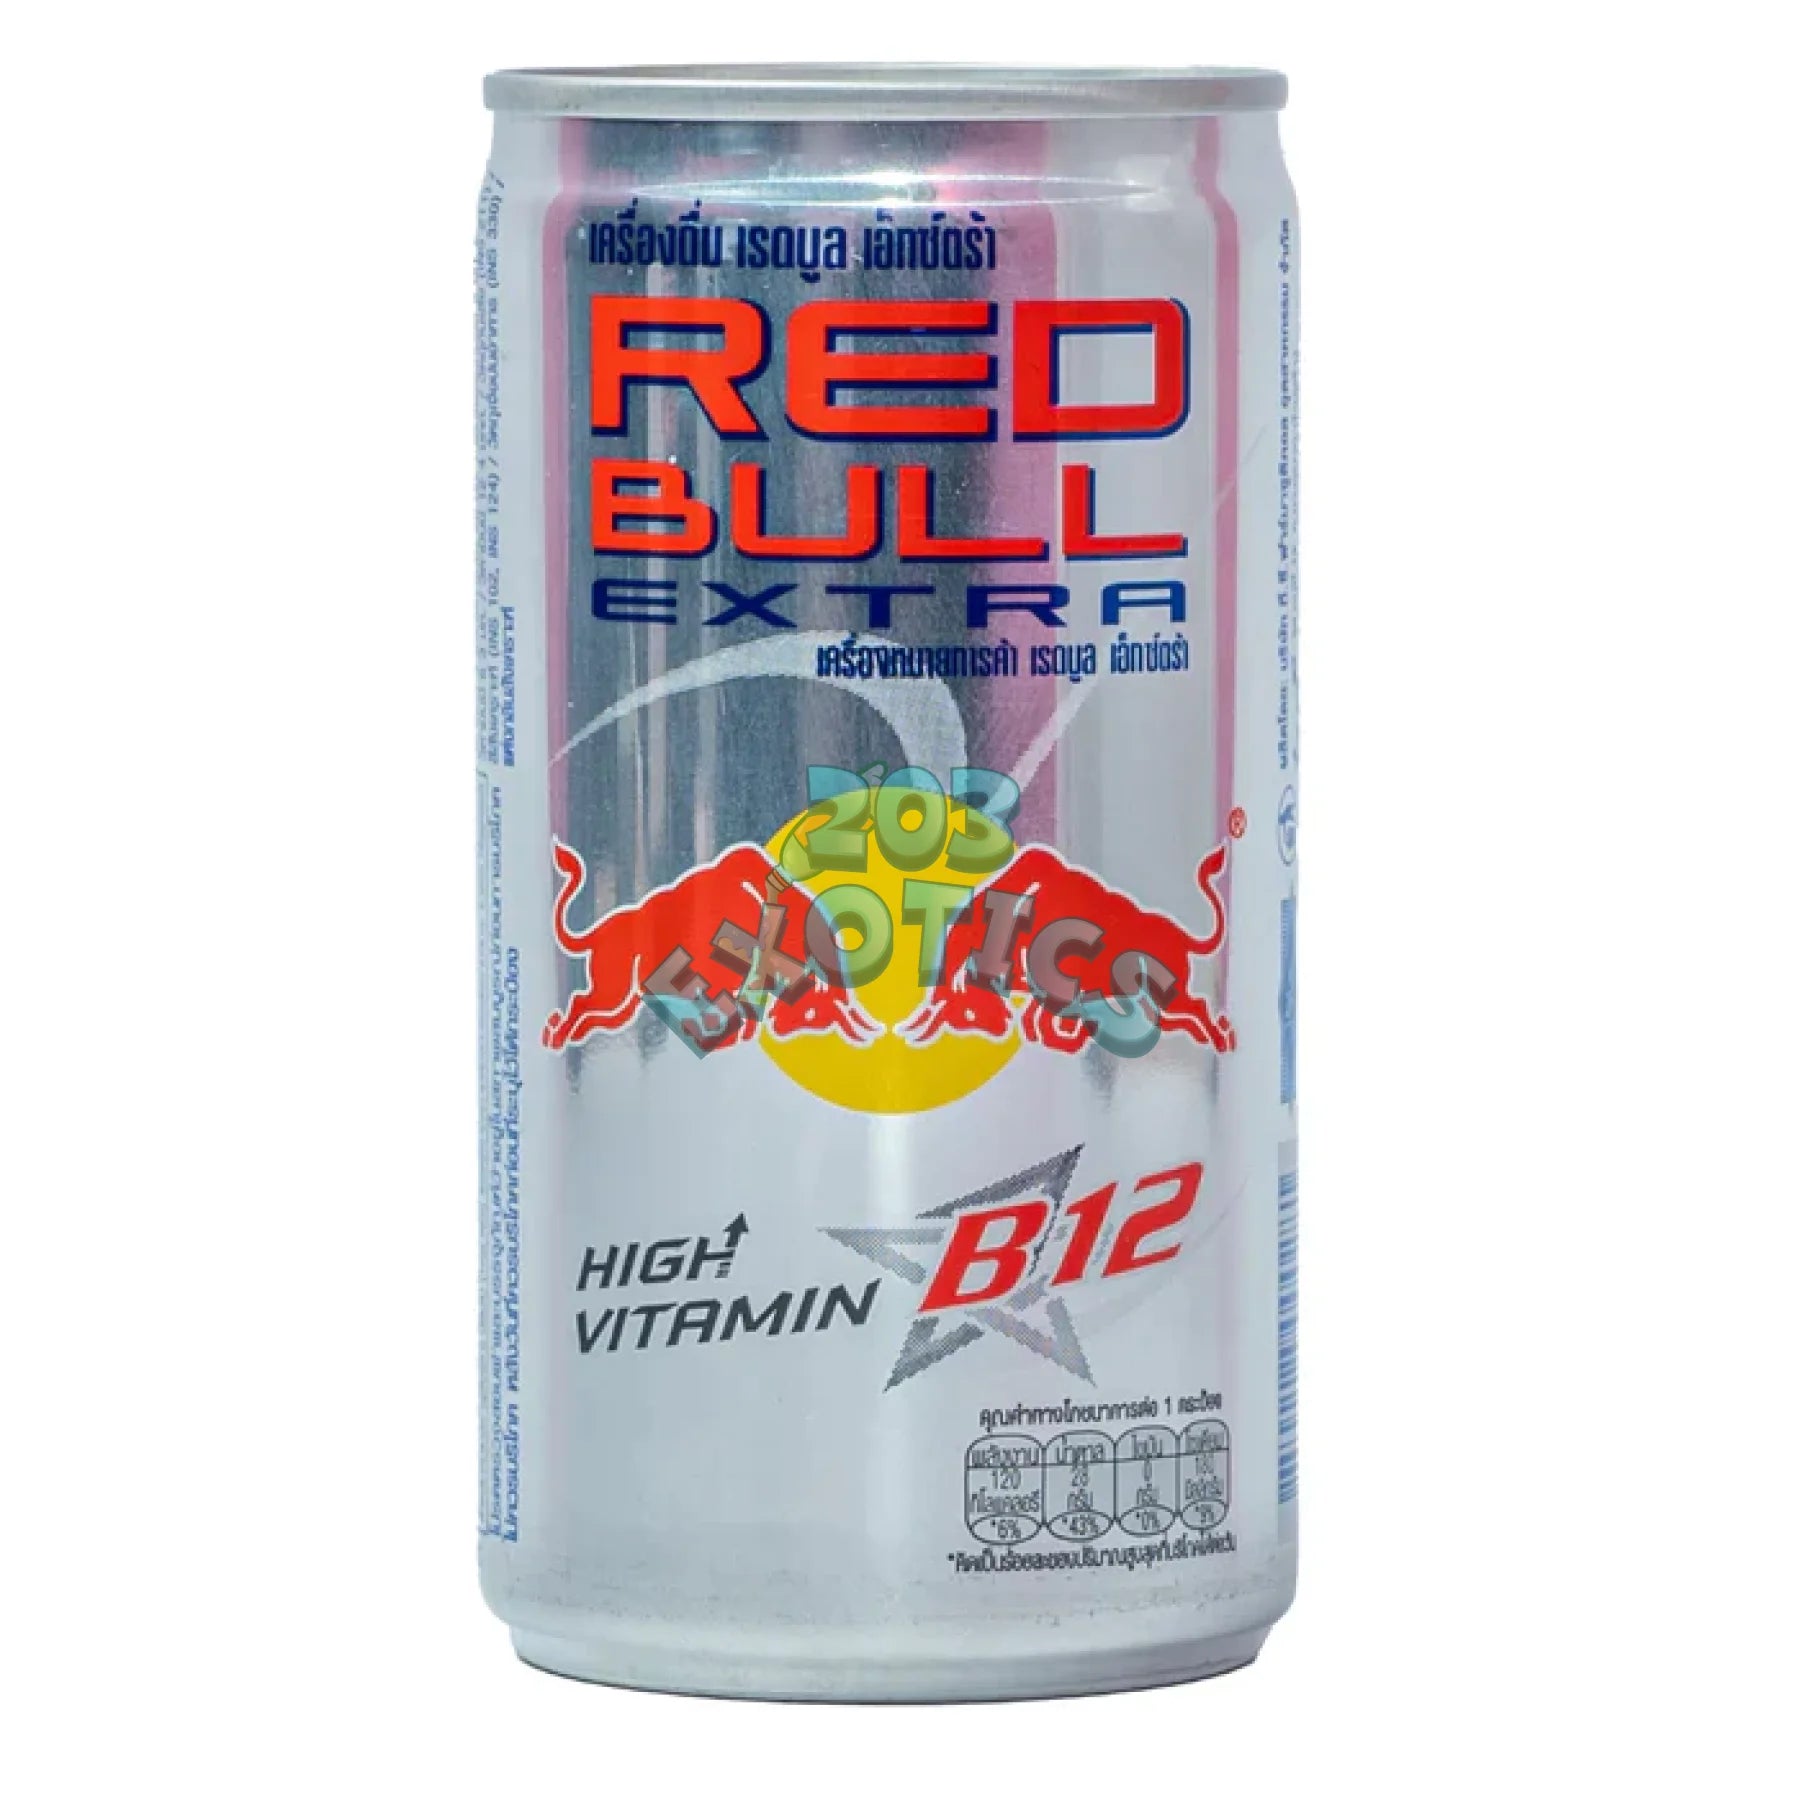 Red Bull Extra High Vitamin B12 (170Ml)